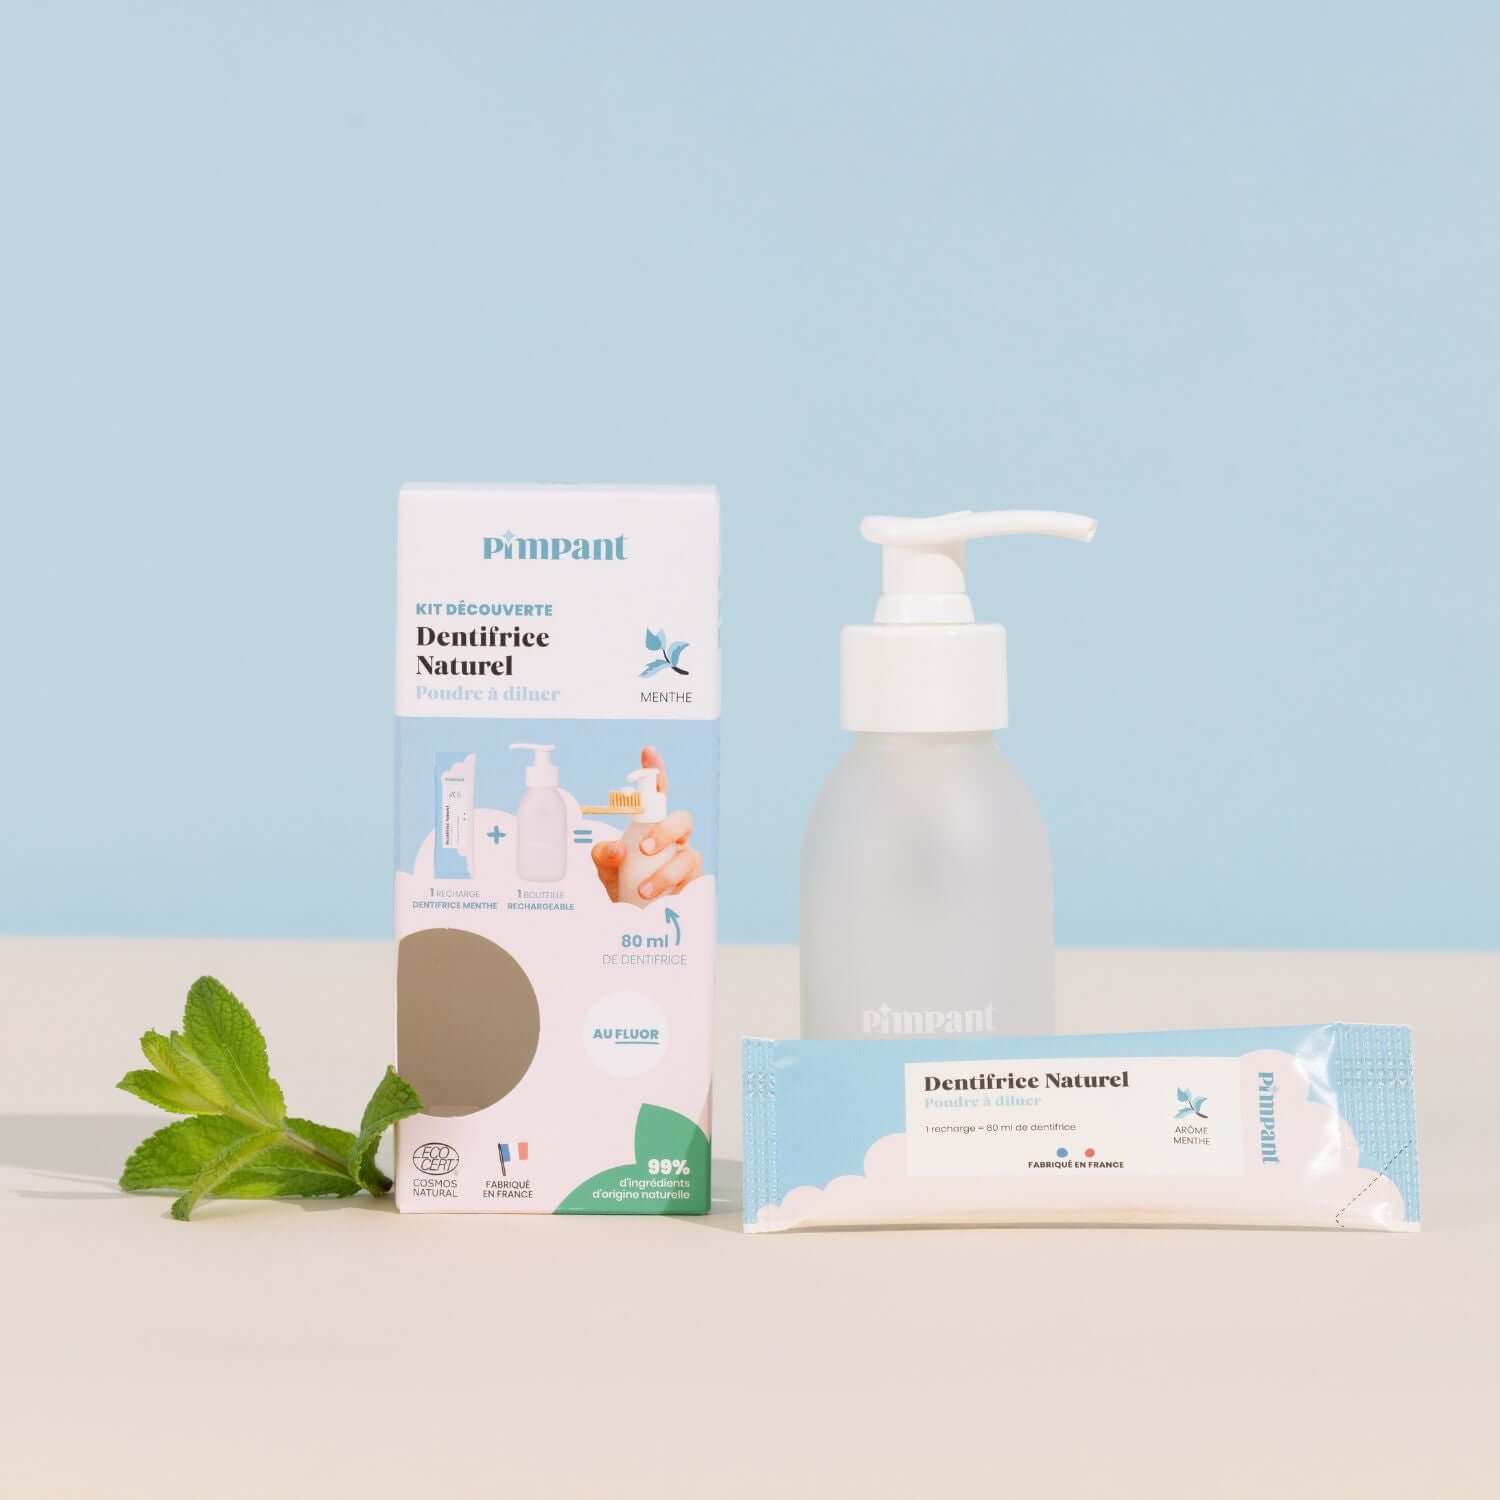 Mint Toothpaste Discovery Kit – Pimpant